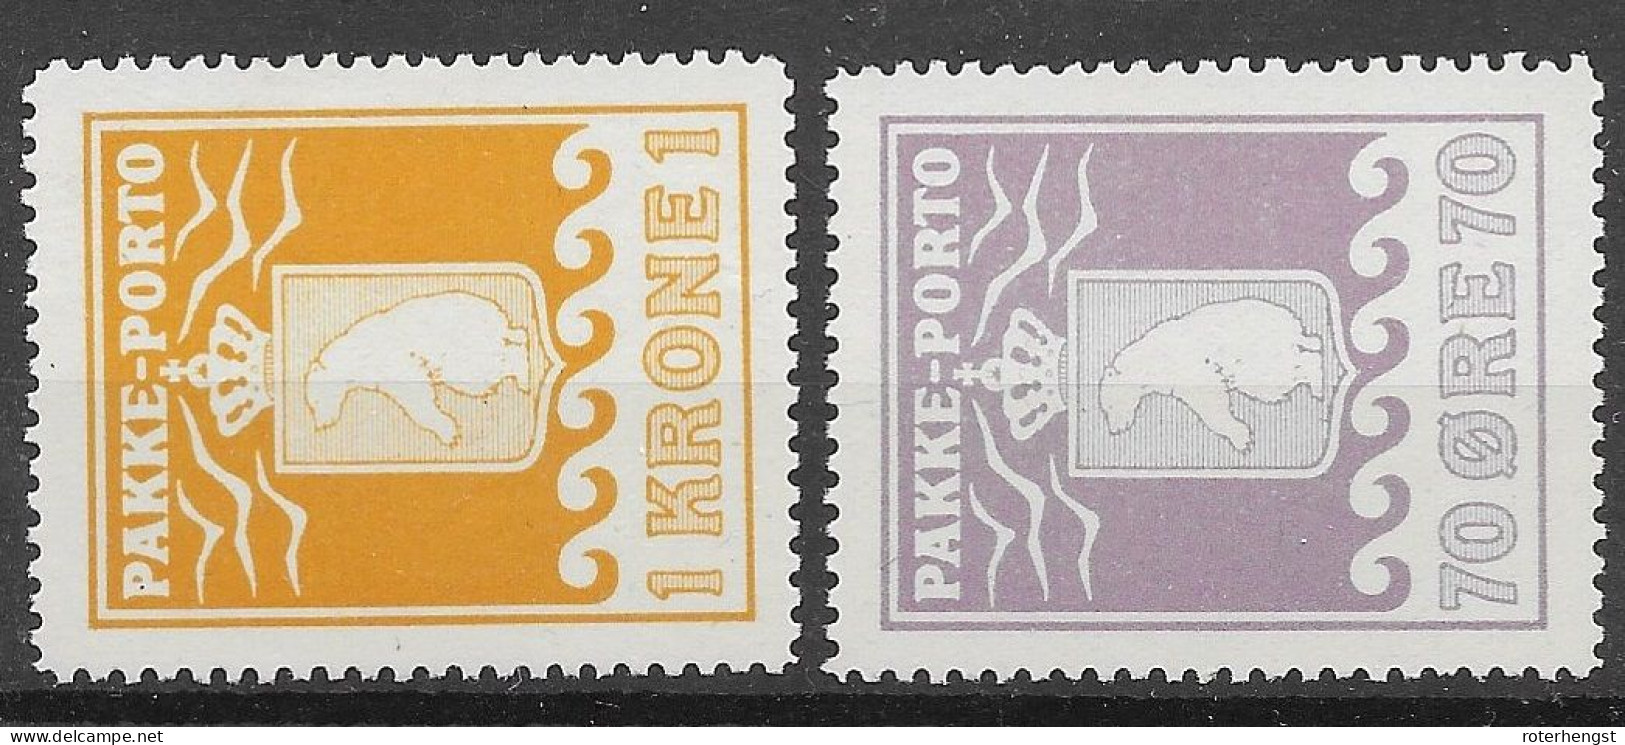 Greenland Mnh ** 1937 130 Euros - Paketmarken